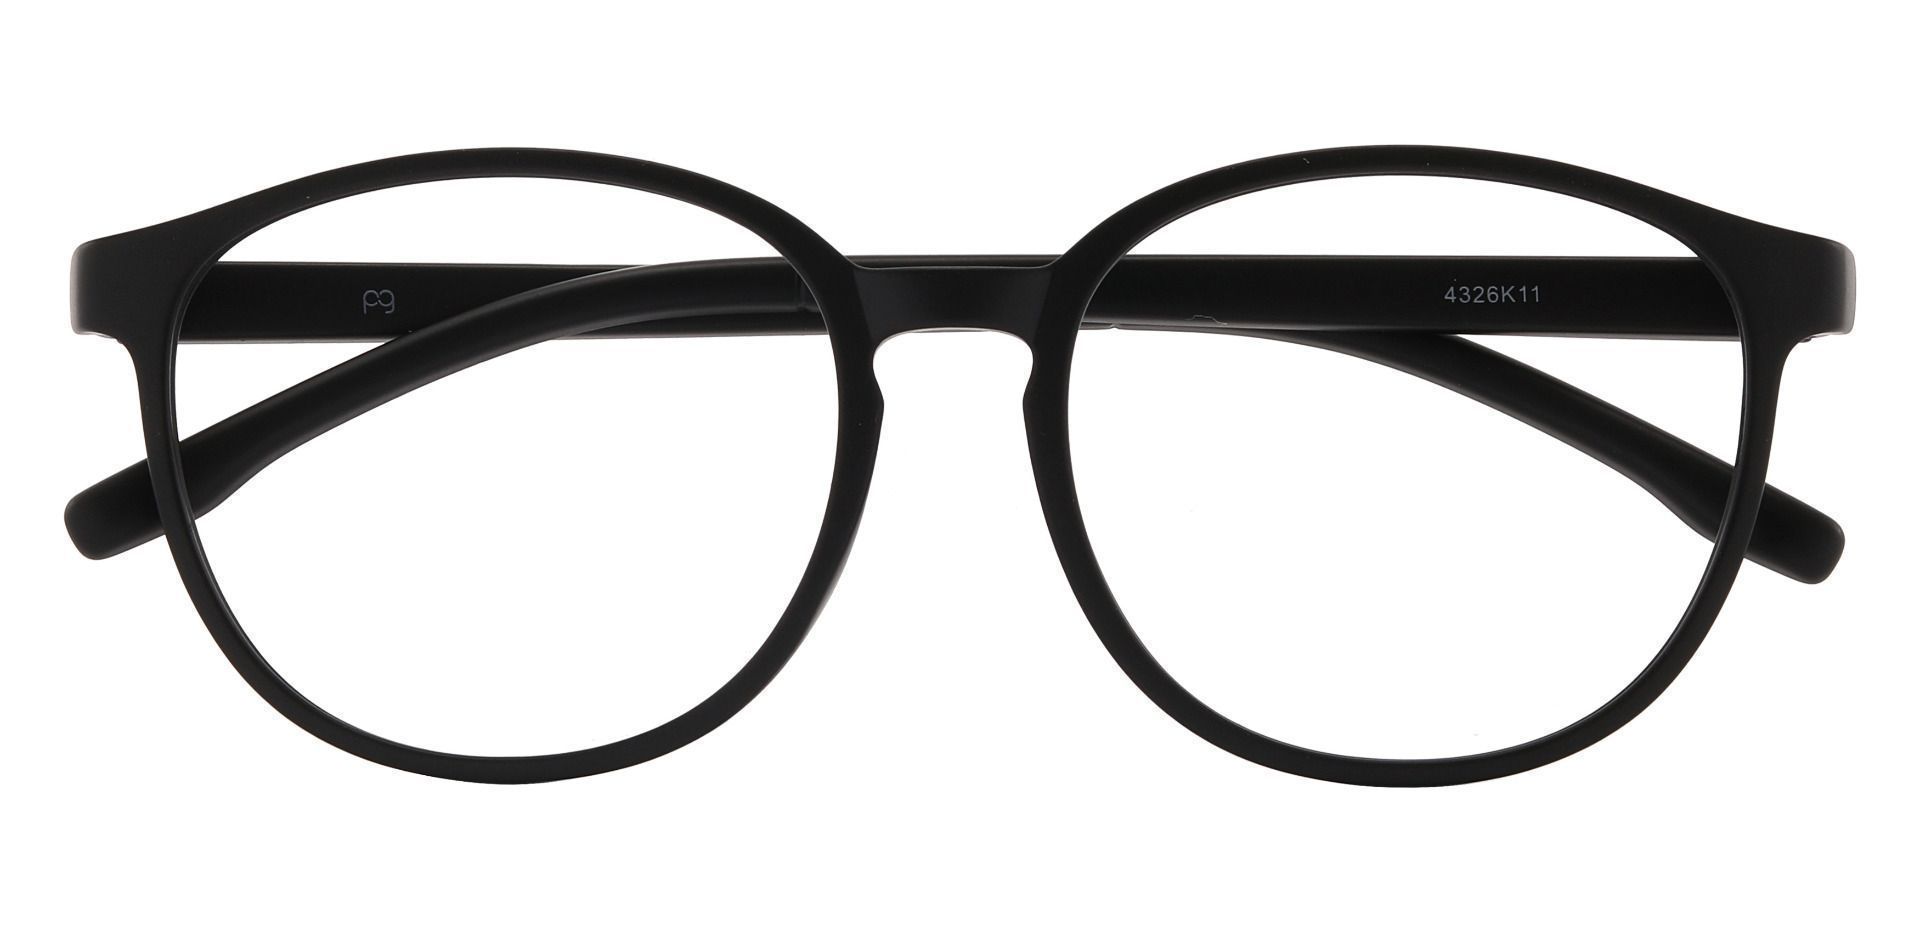 Molasses Oval Reading Glasses - Black